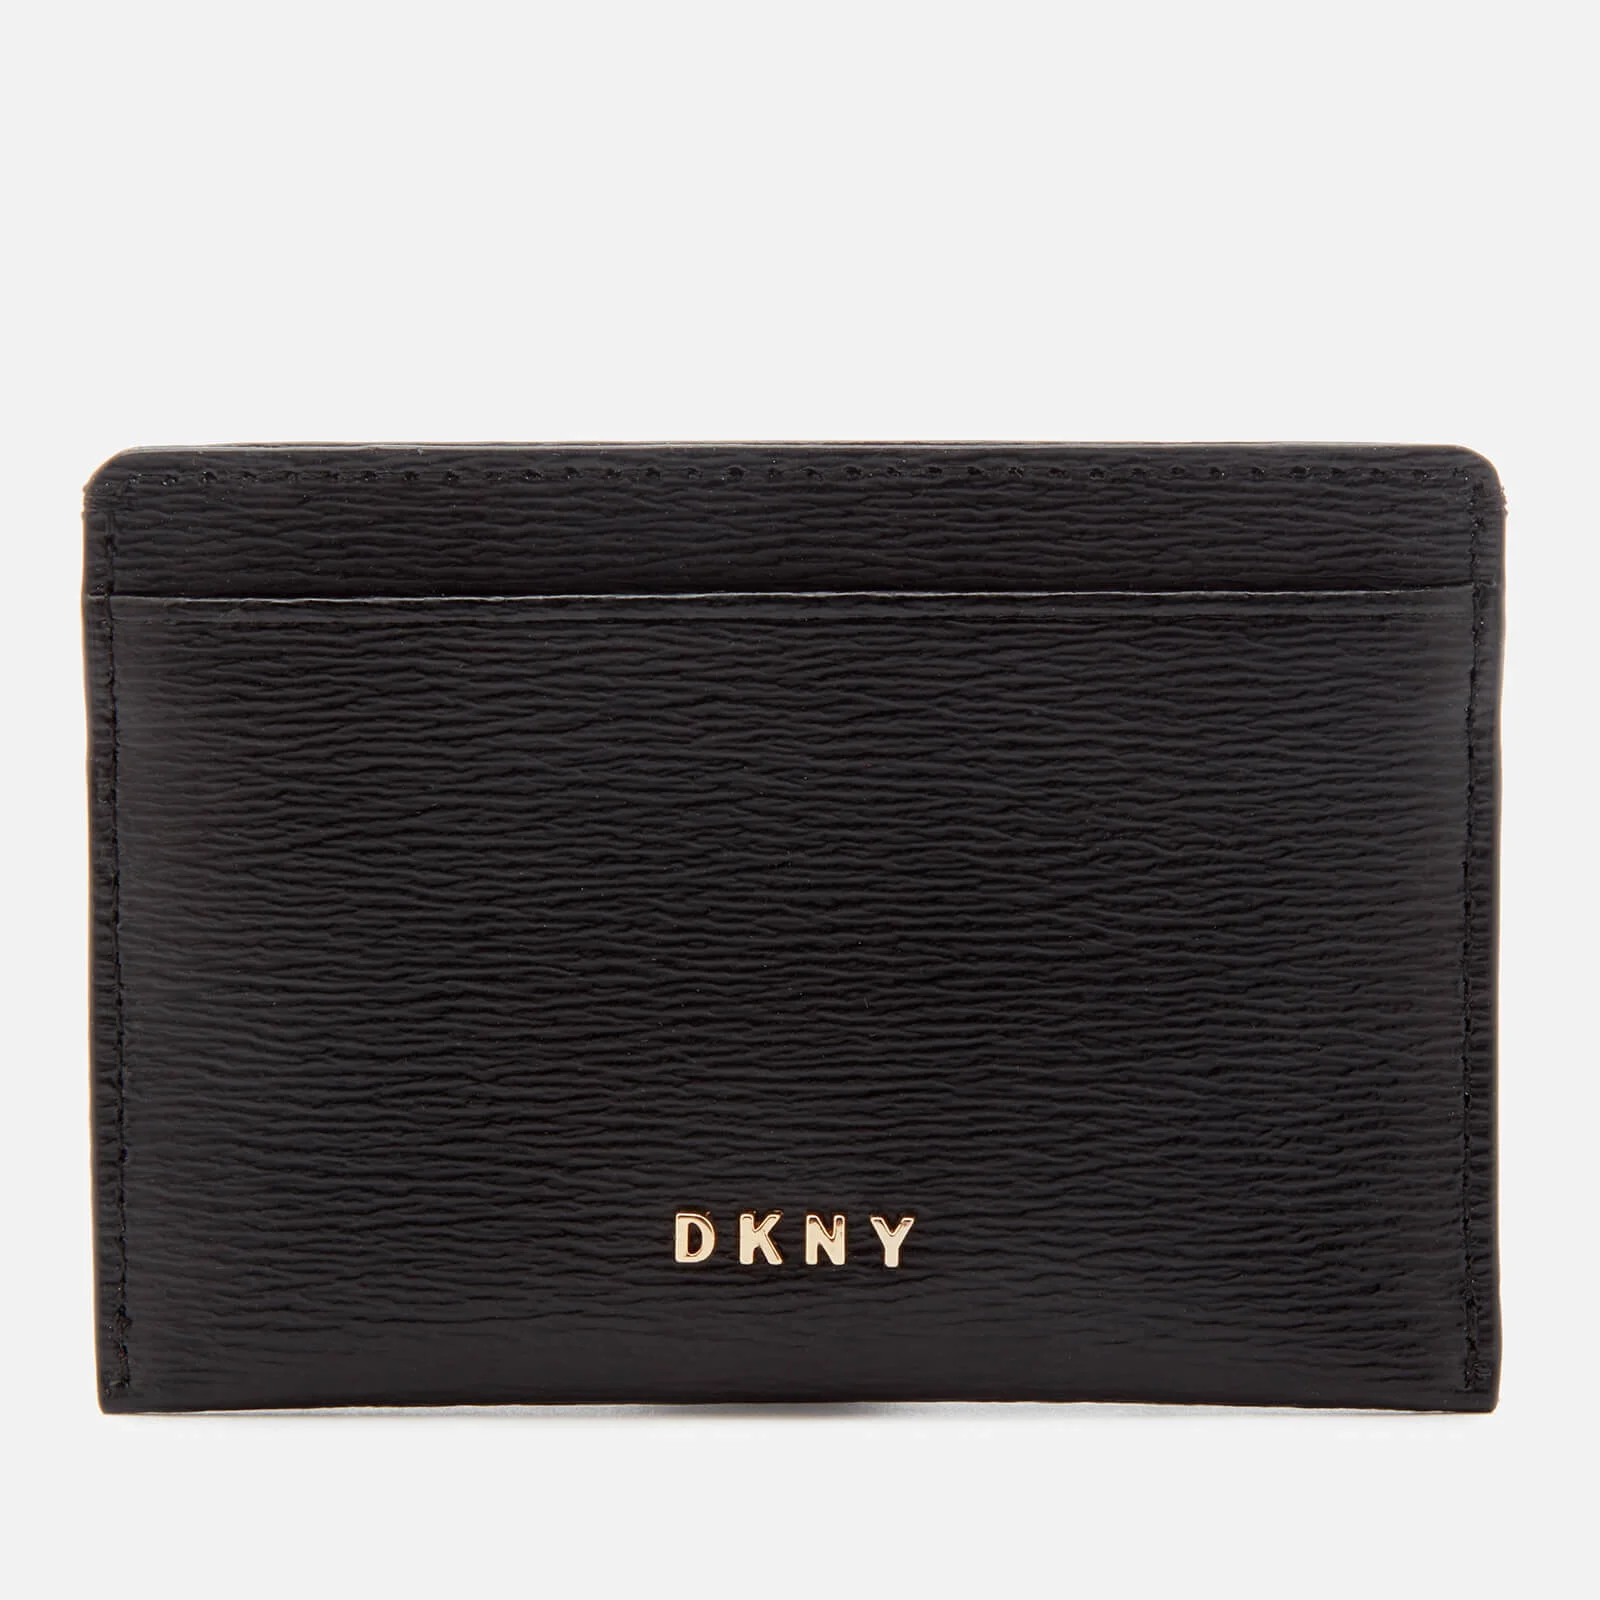 DKNY Women's Bryant Card Holder - Black Image 1